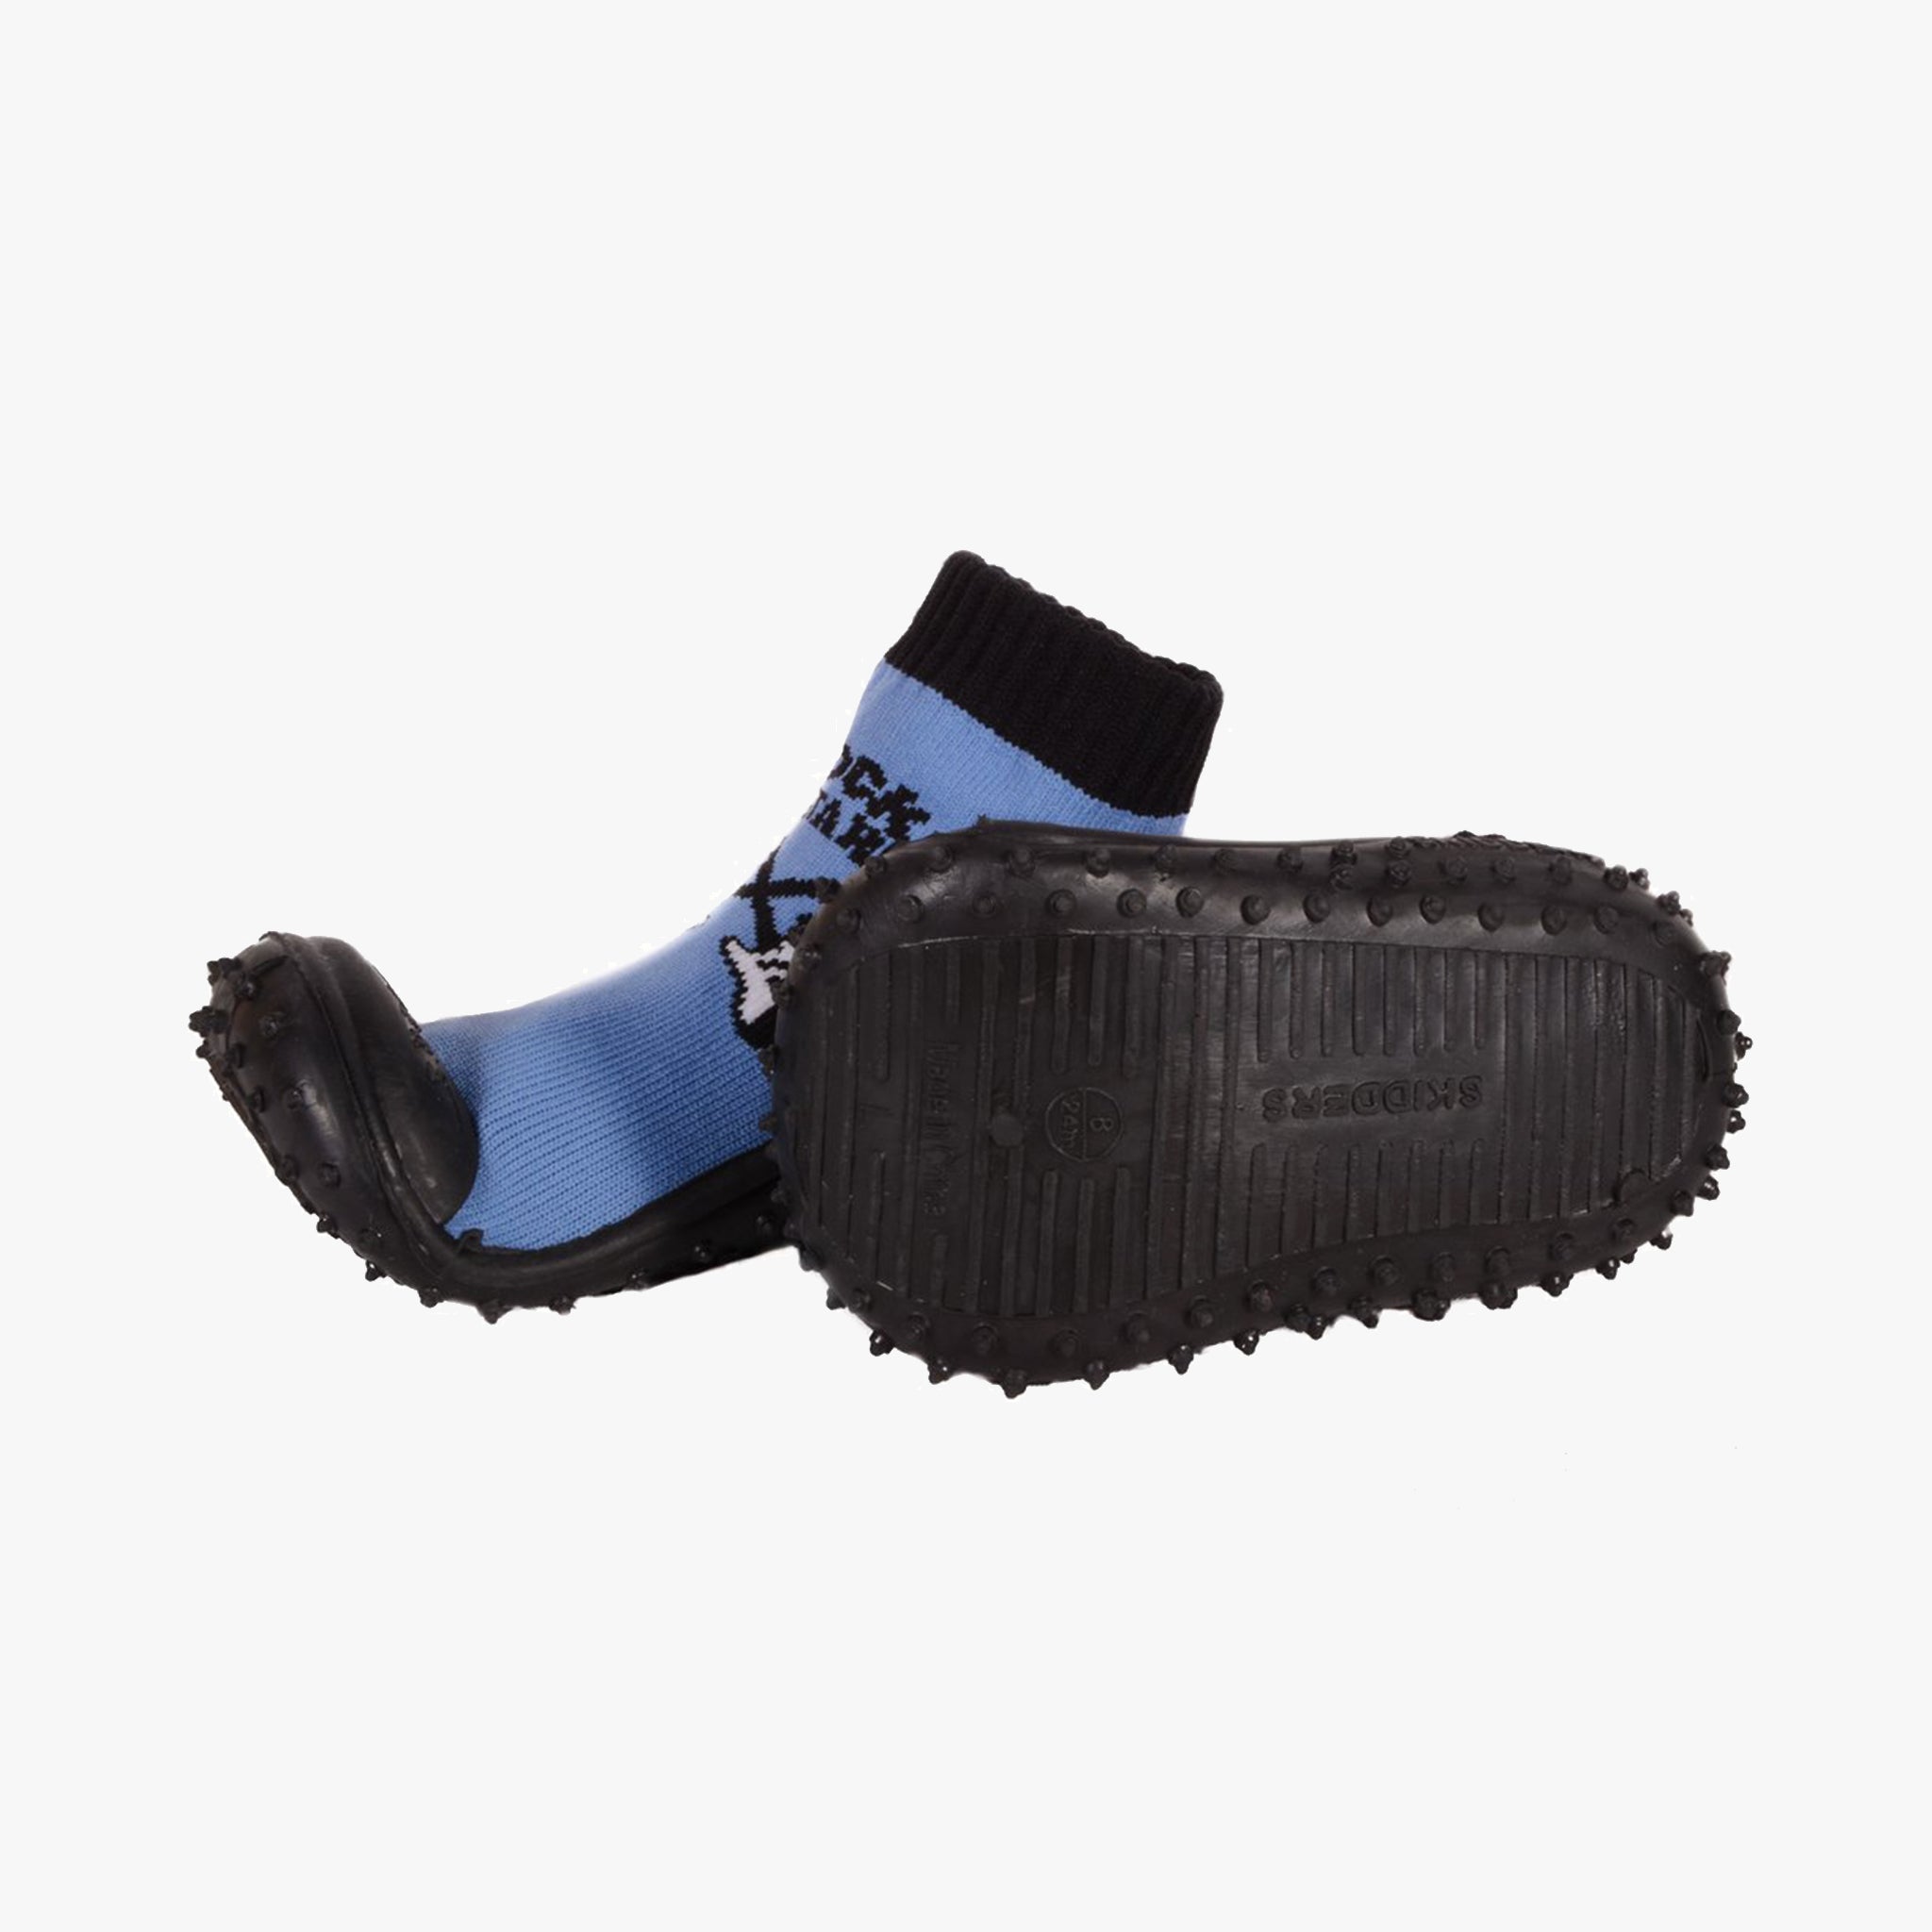 The Original Skidders: Baby Grip Shoes and Grip Socks